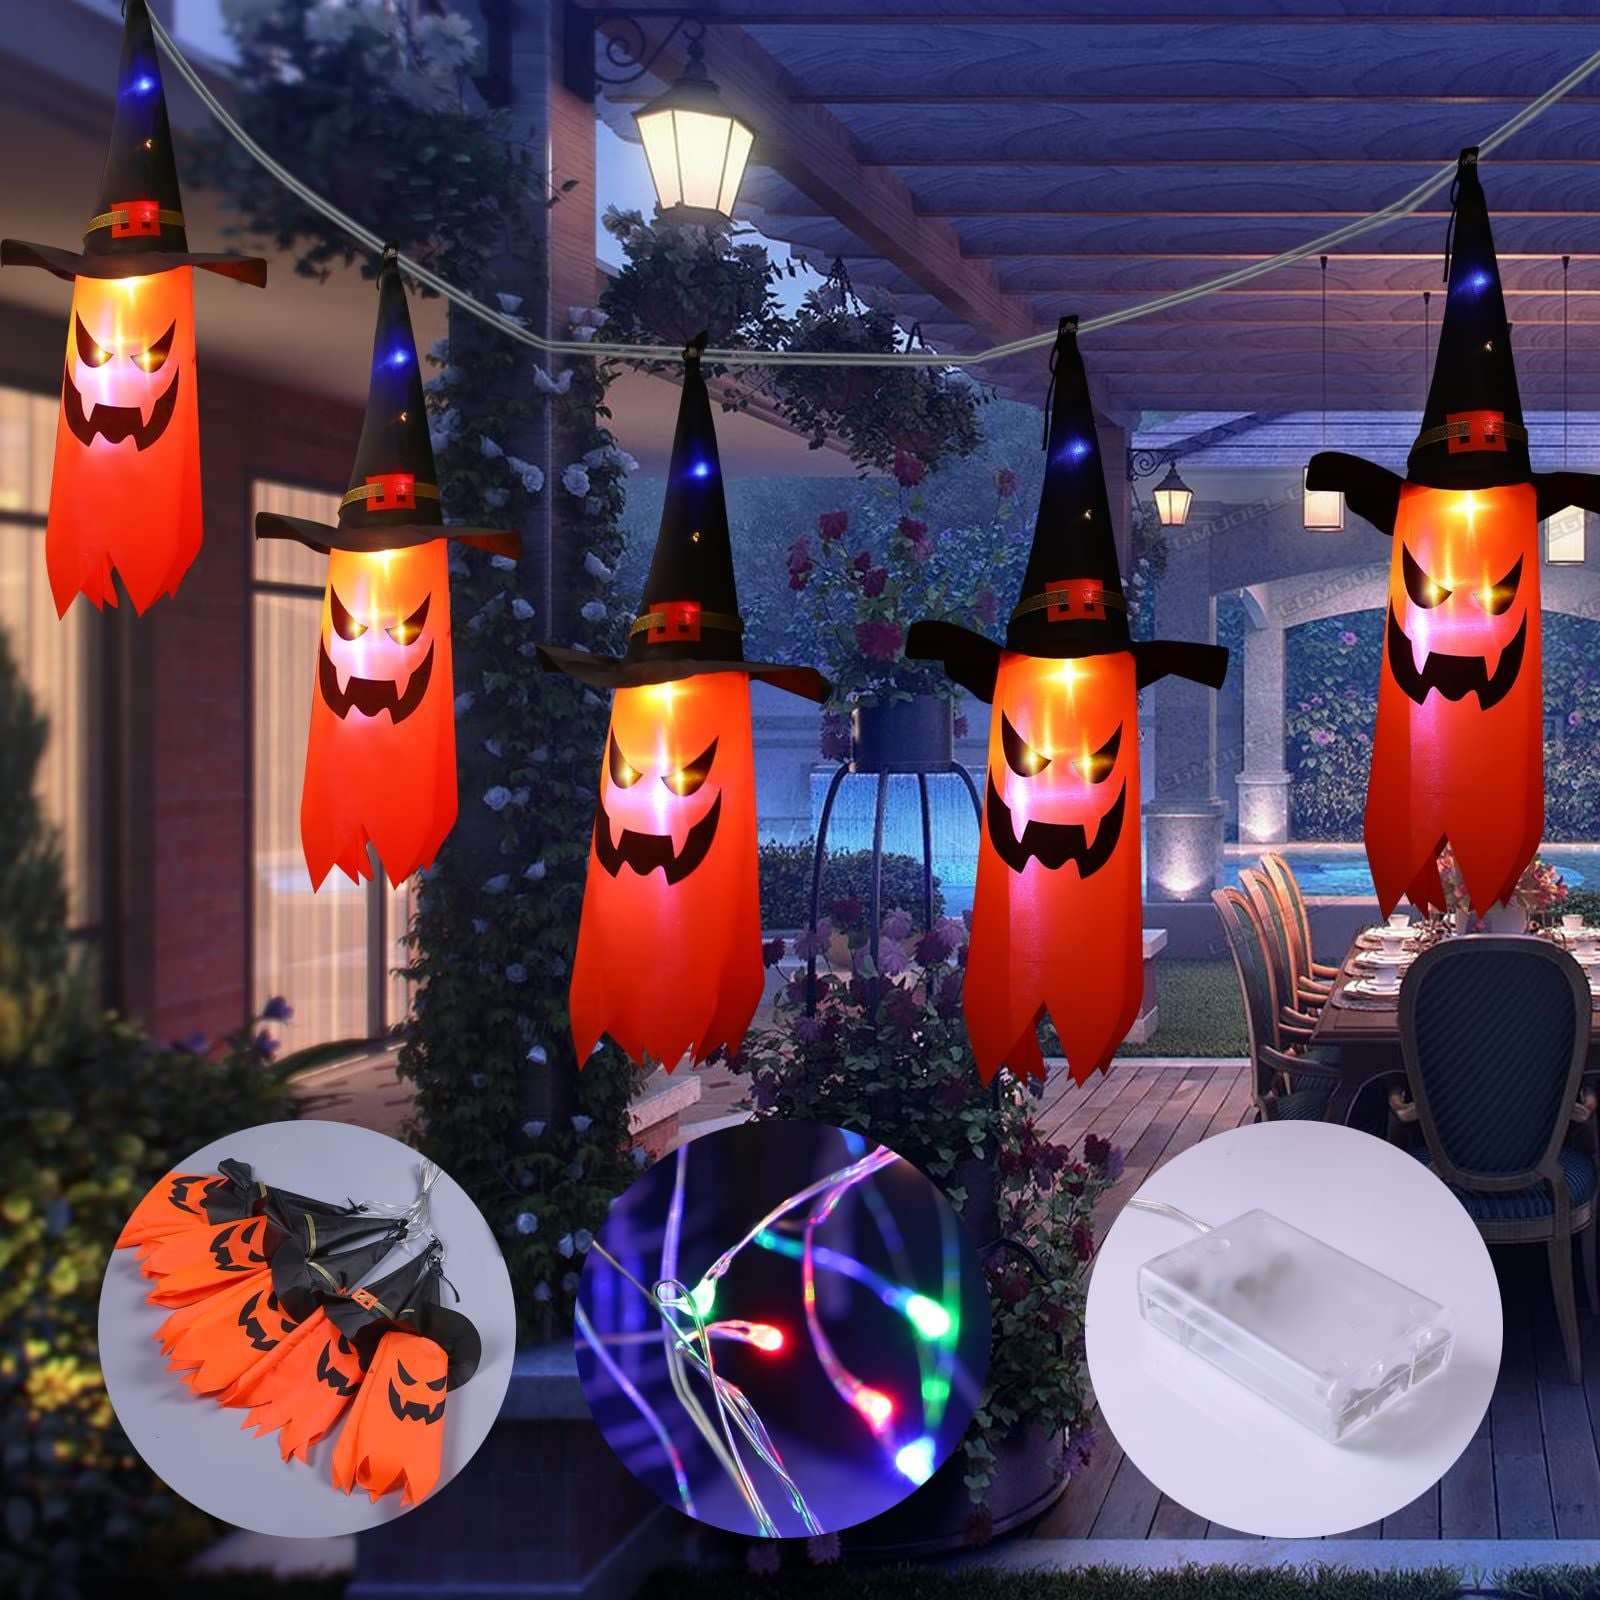 5 String Wizard Hats Halloween Decoration String Lights Horror, Halloween Decoration, Halloween String Lights